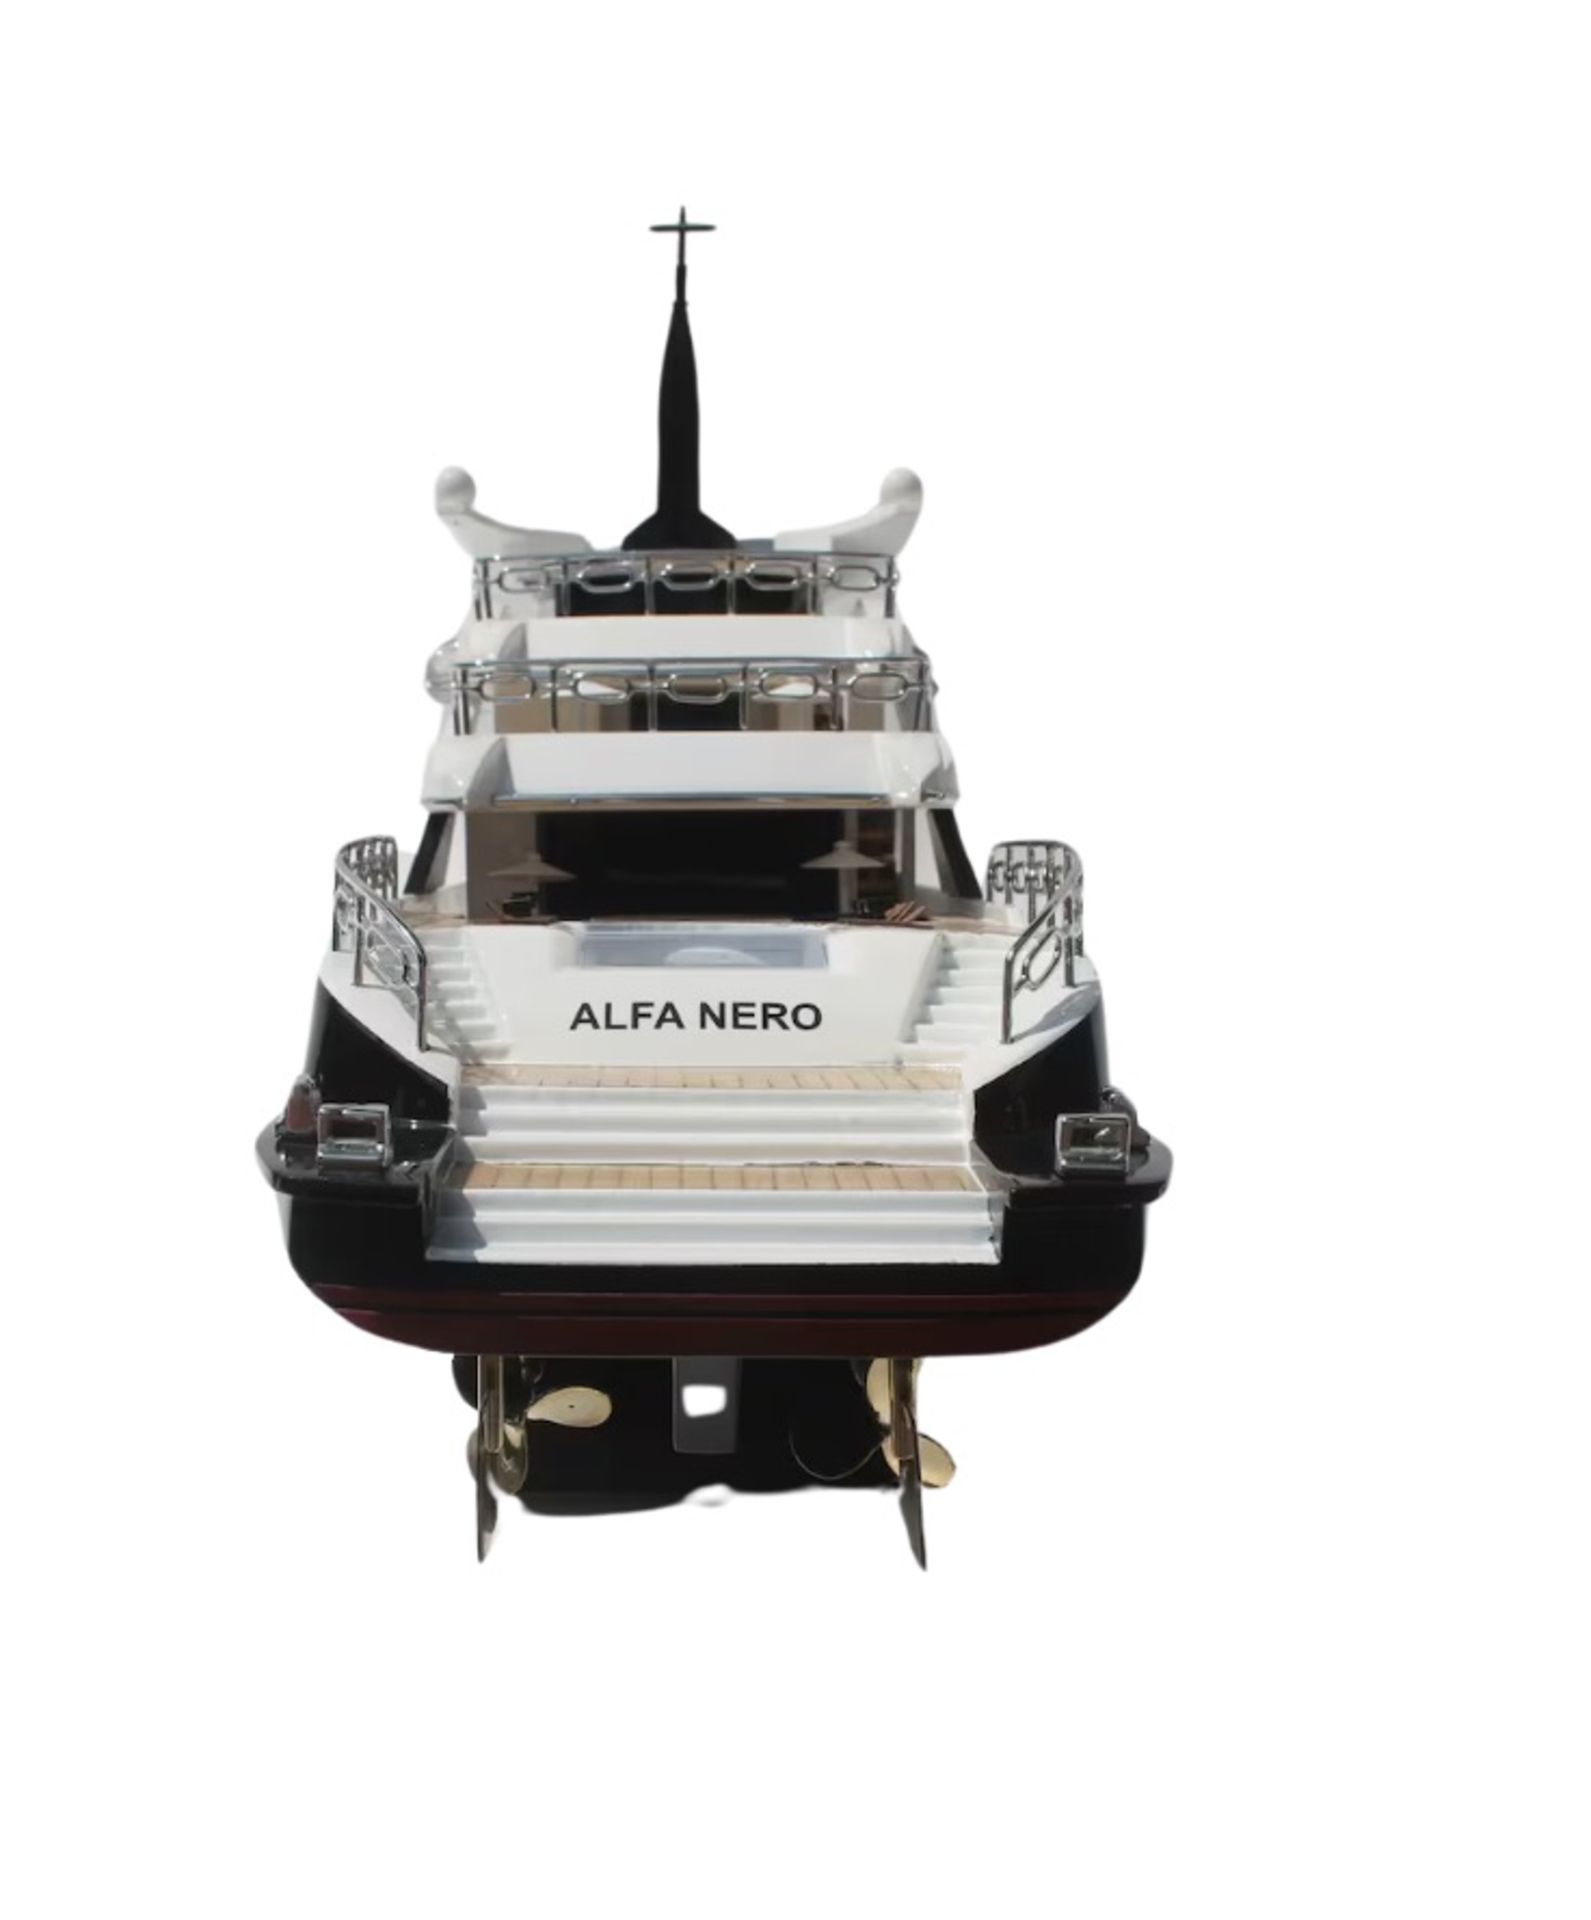 Alfa Nero Wooden Scale Yacht Display Model - Image 6 of 10